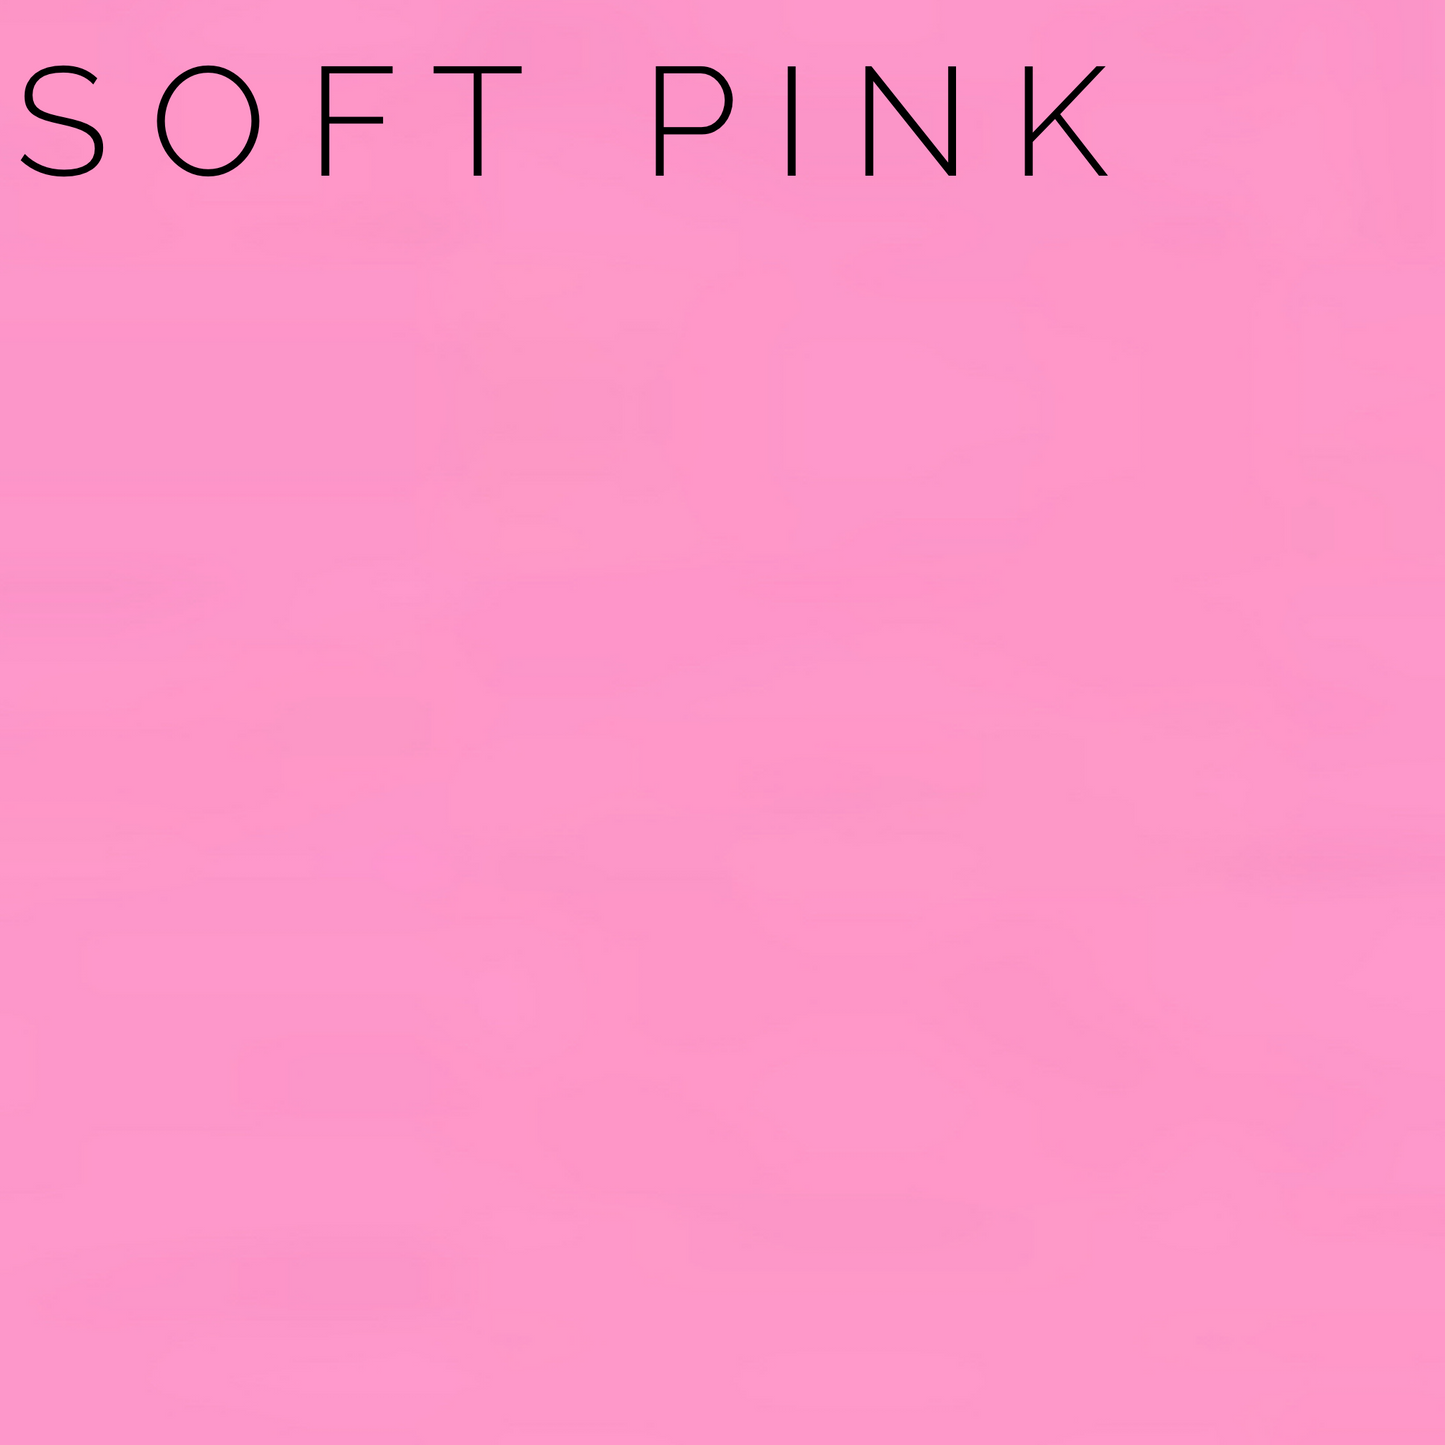 Soft Pink Self Adhesive Glossy Vinyl - Sign Vinyl Oracle 651